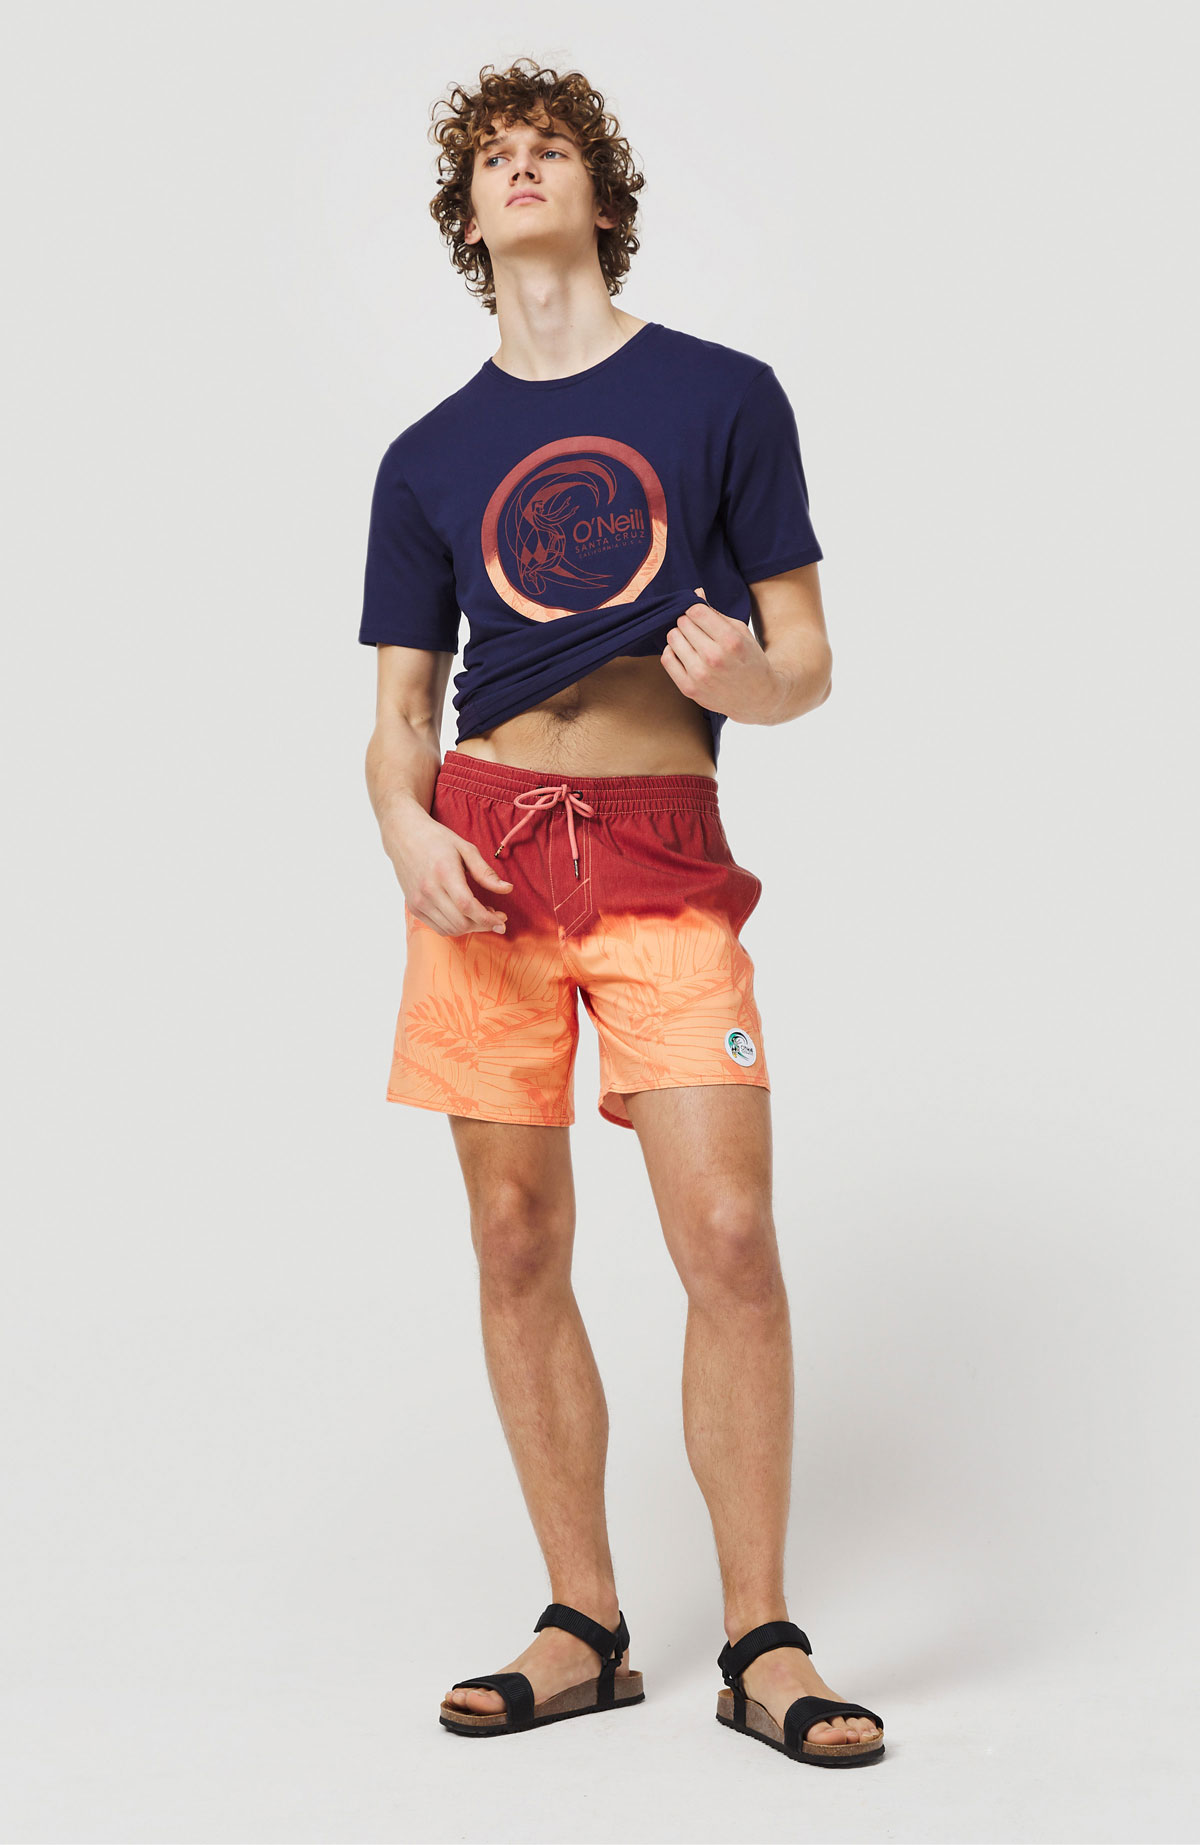 Men's water shorts